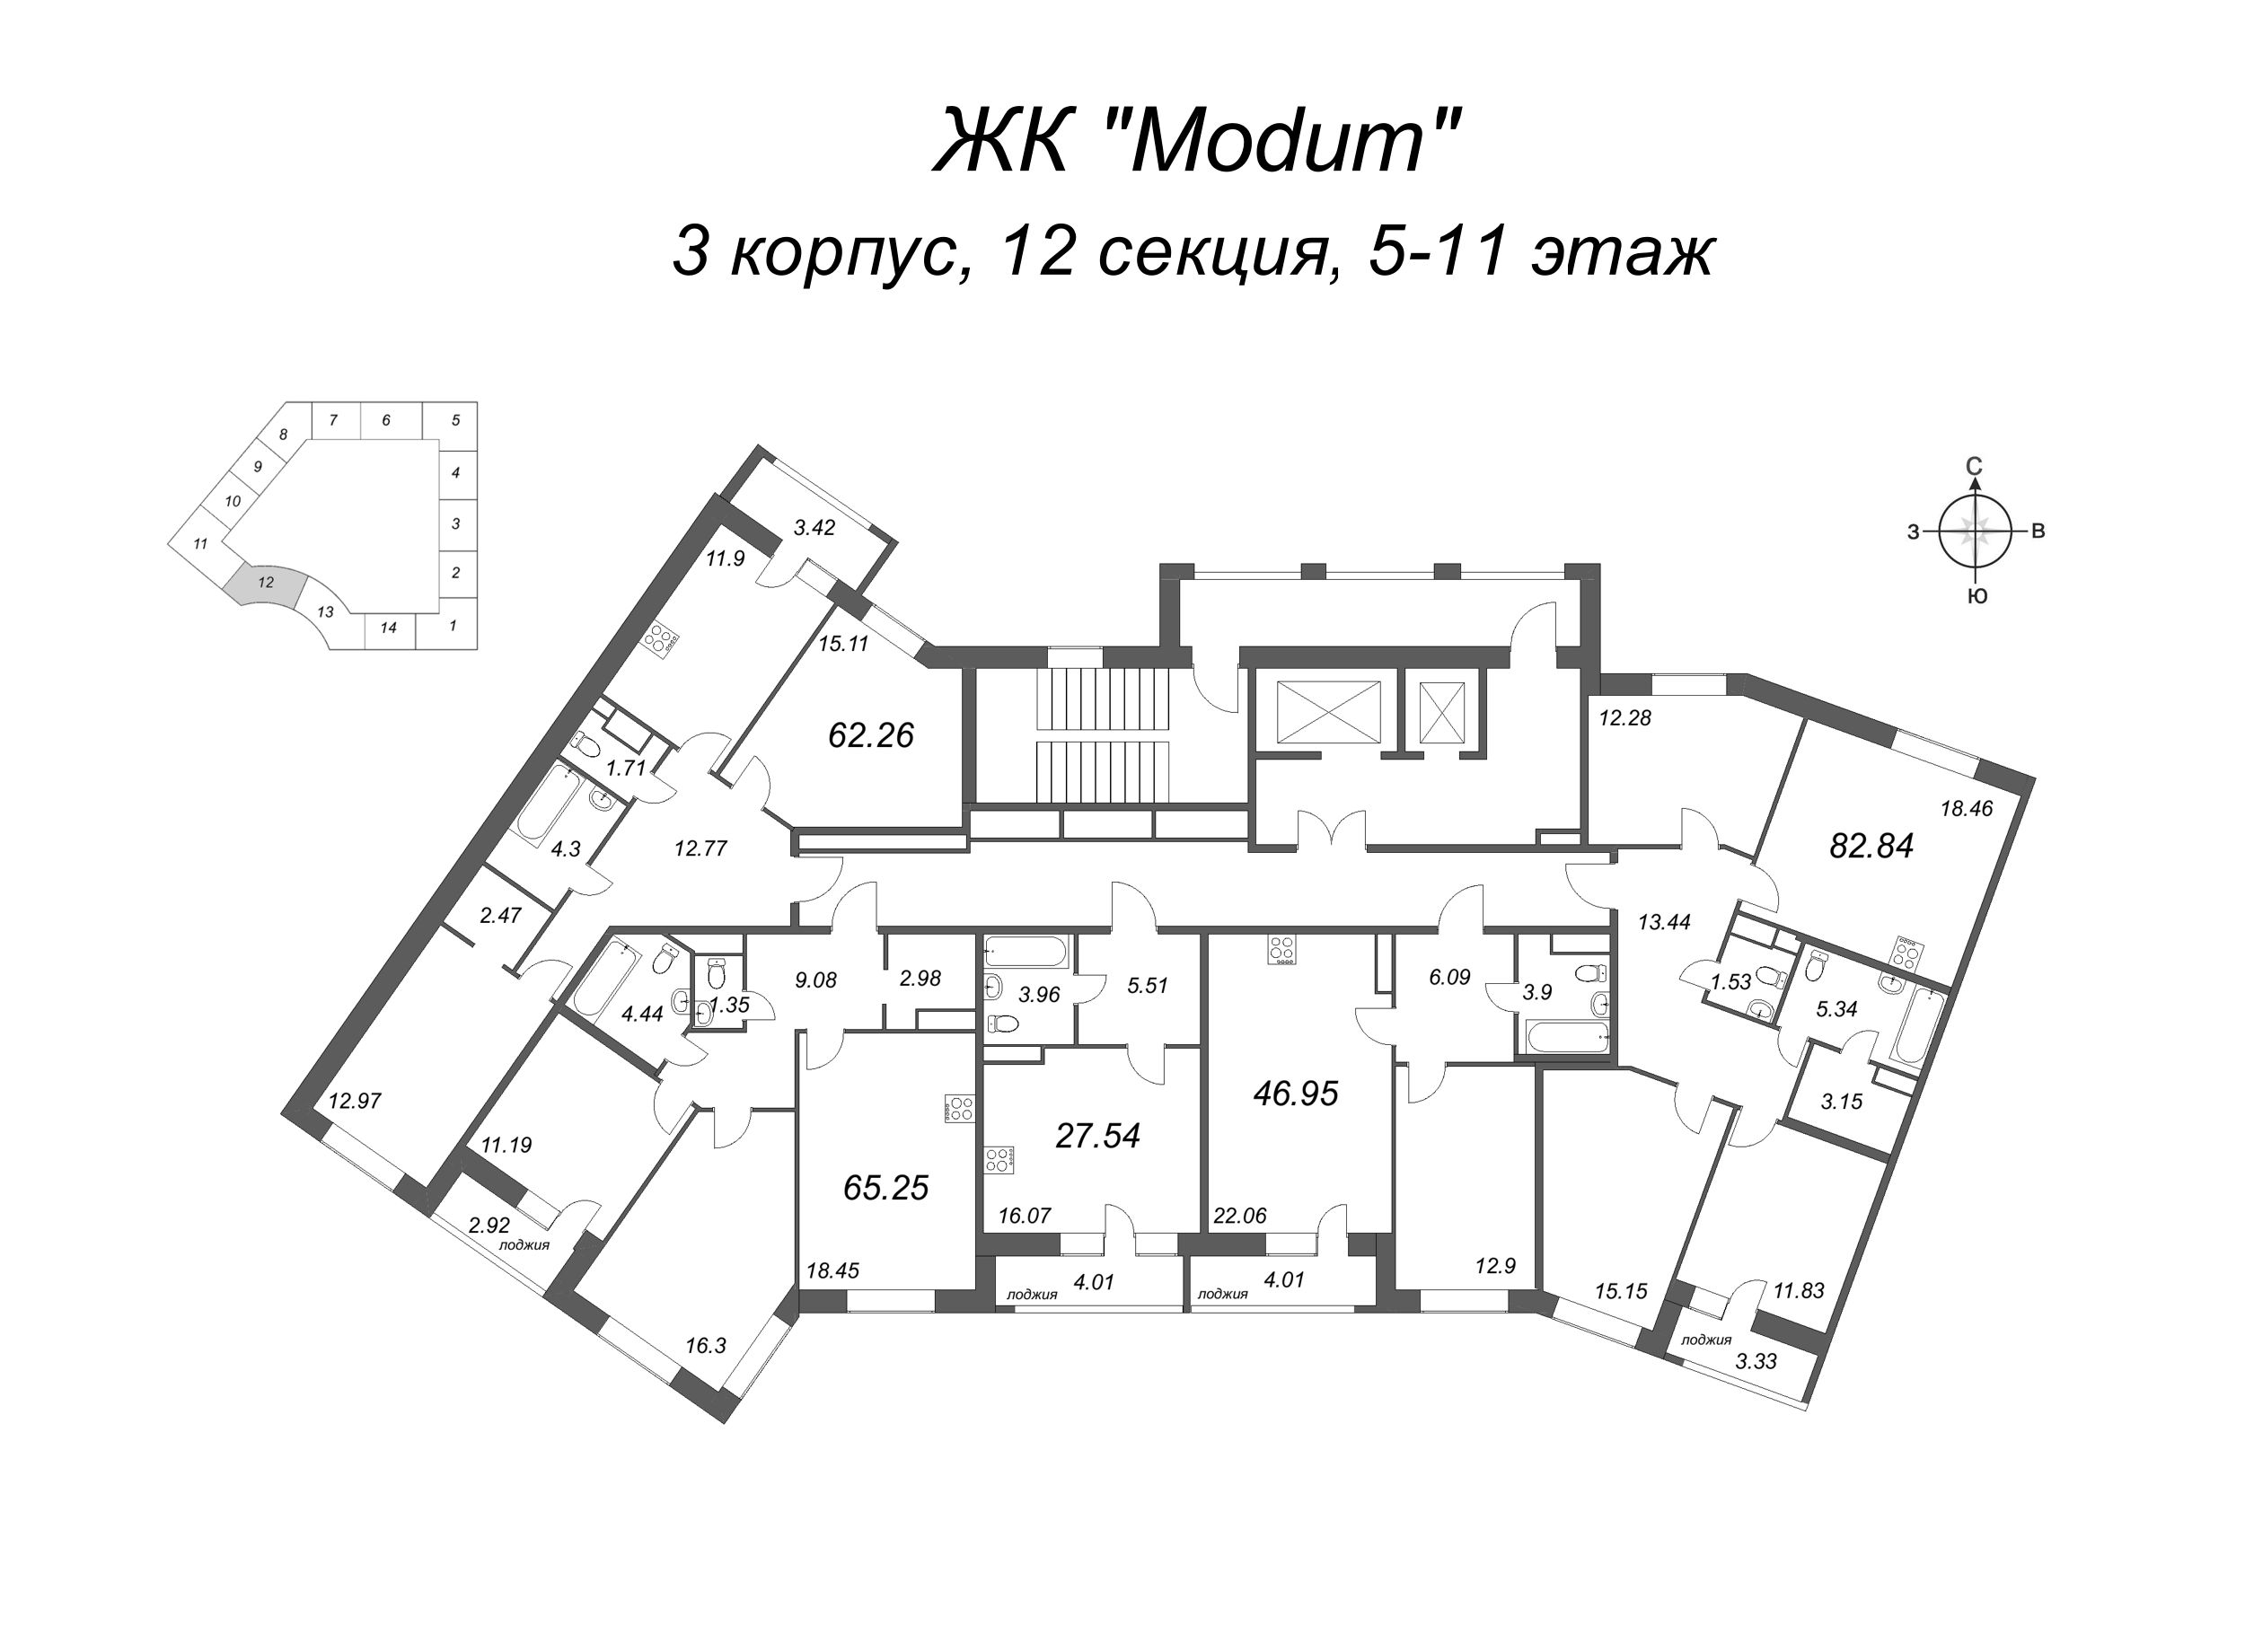 3-комнатная (Евро) квартира, 65.25 м² - планировка этажа